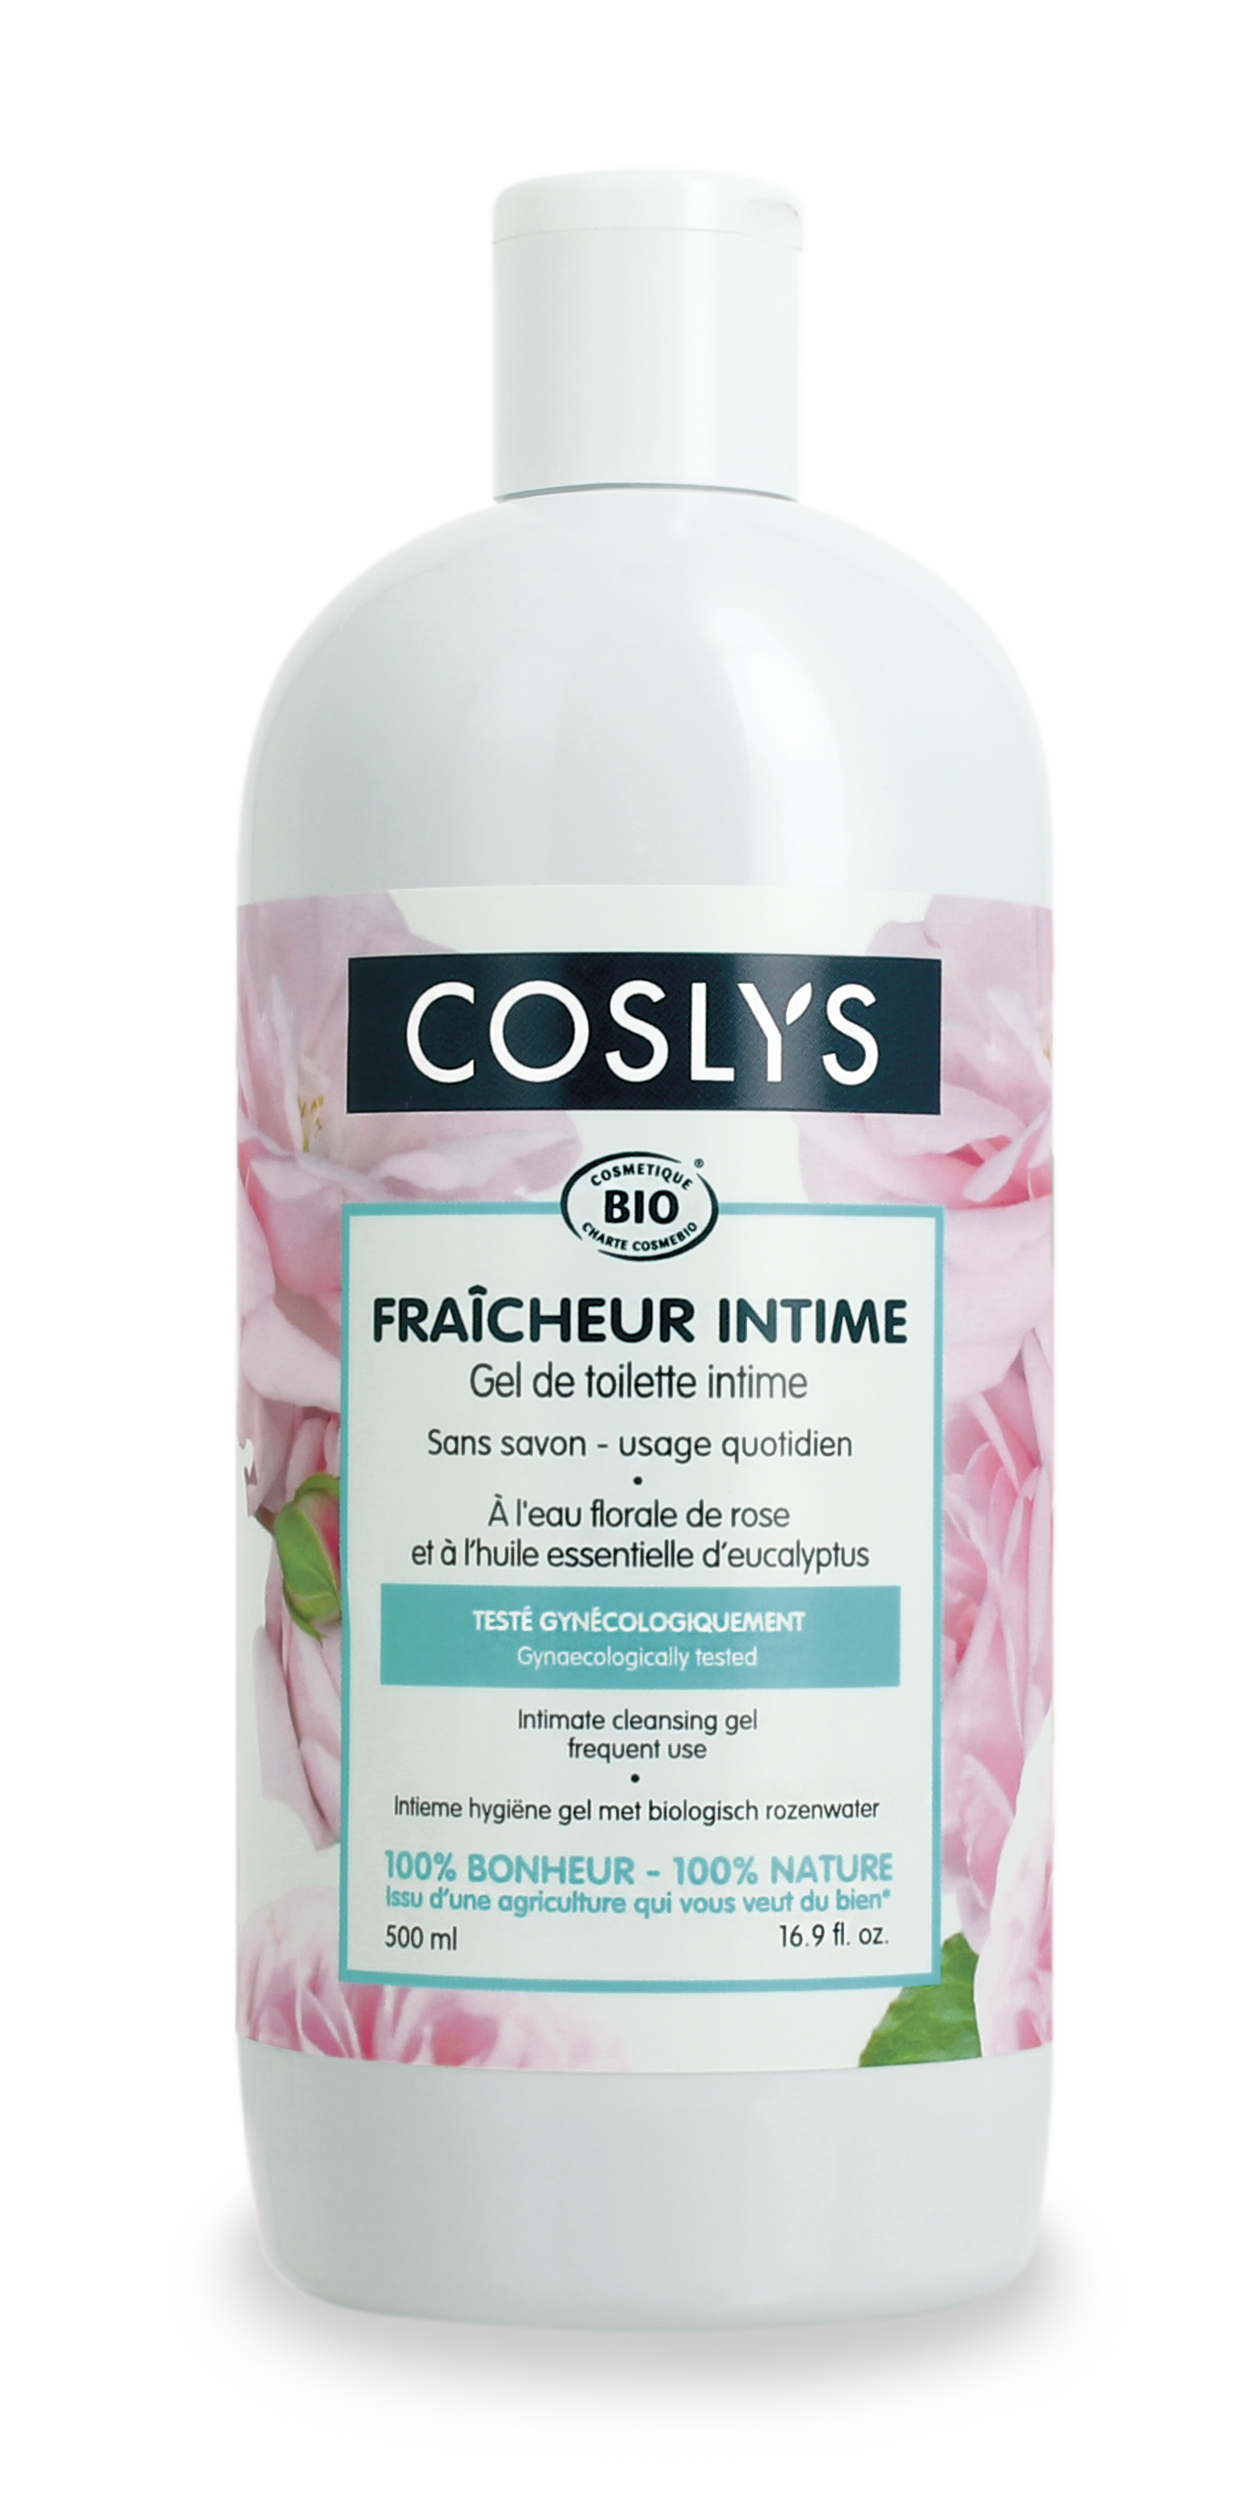 Coslys-Fraicheur intime-Gel intime 500ml